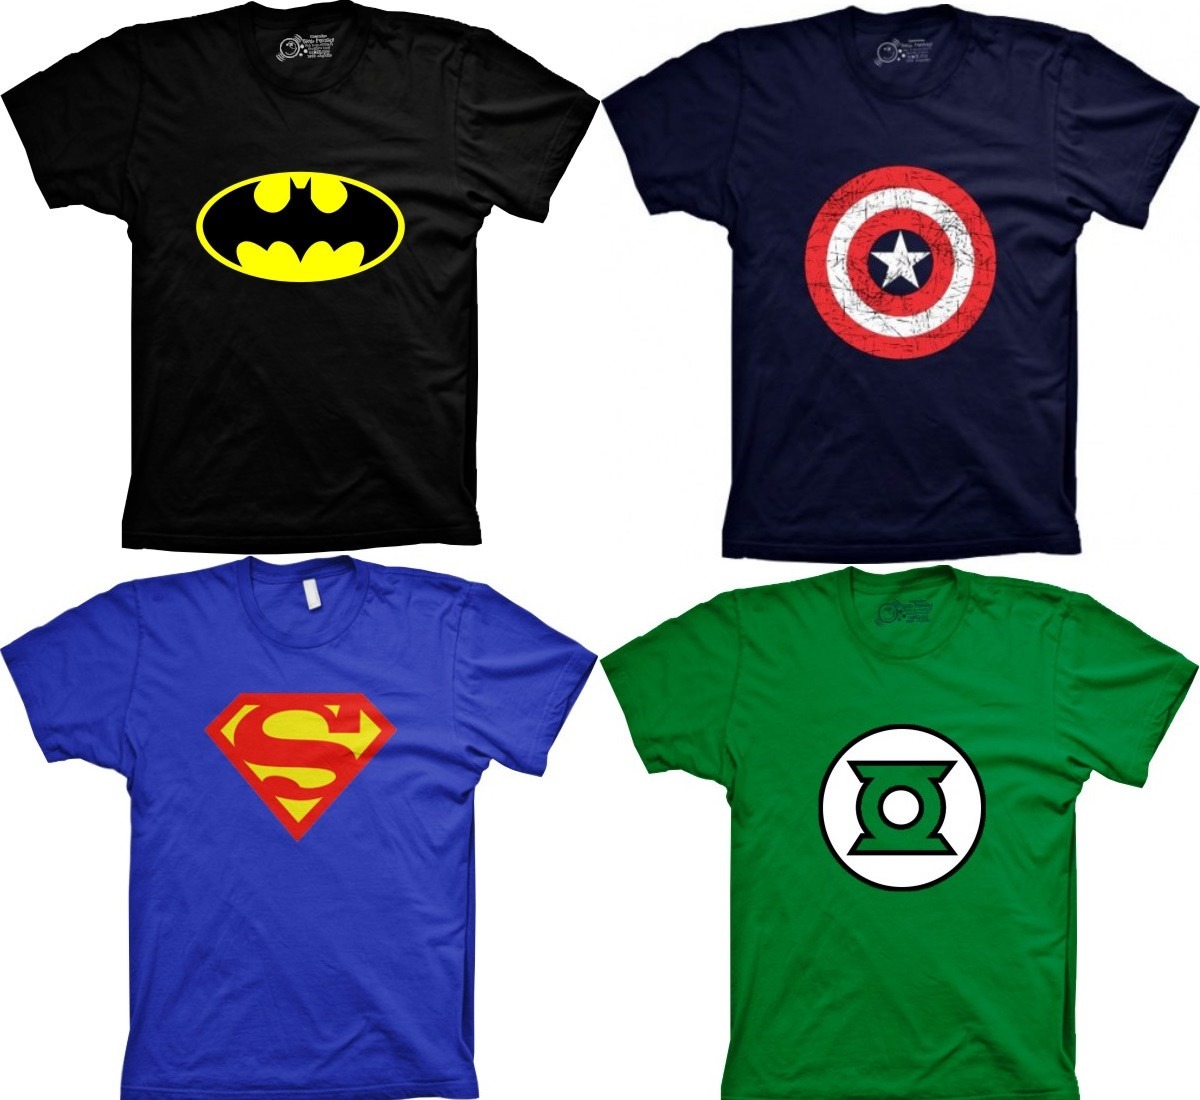 camisetas-super-herois-masculina-feminina-e-infantil-flash-12316-MLB20059045297_032014-F